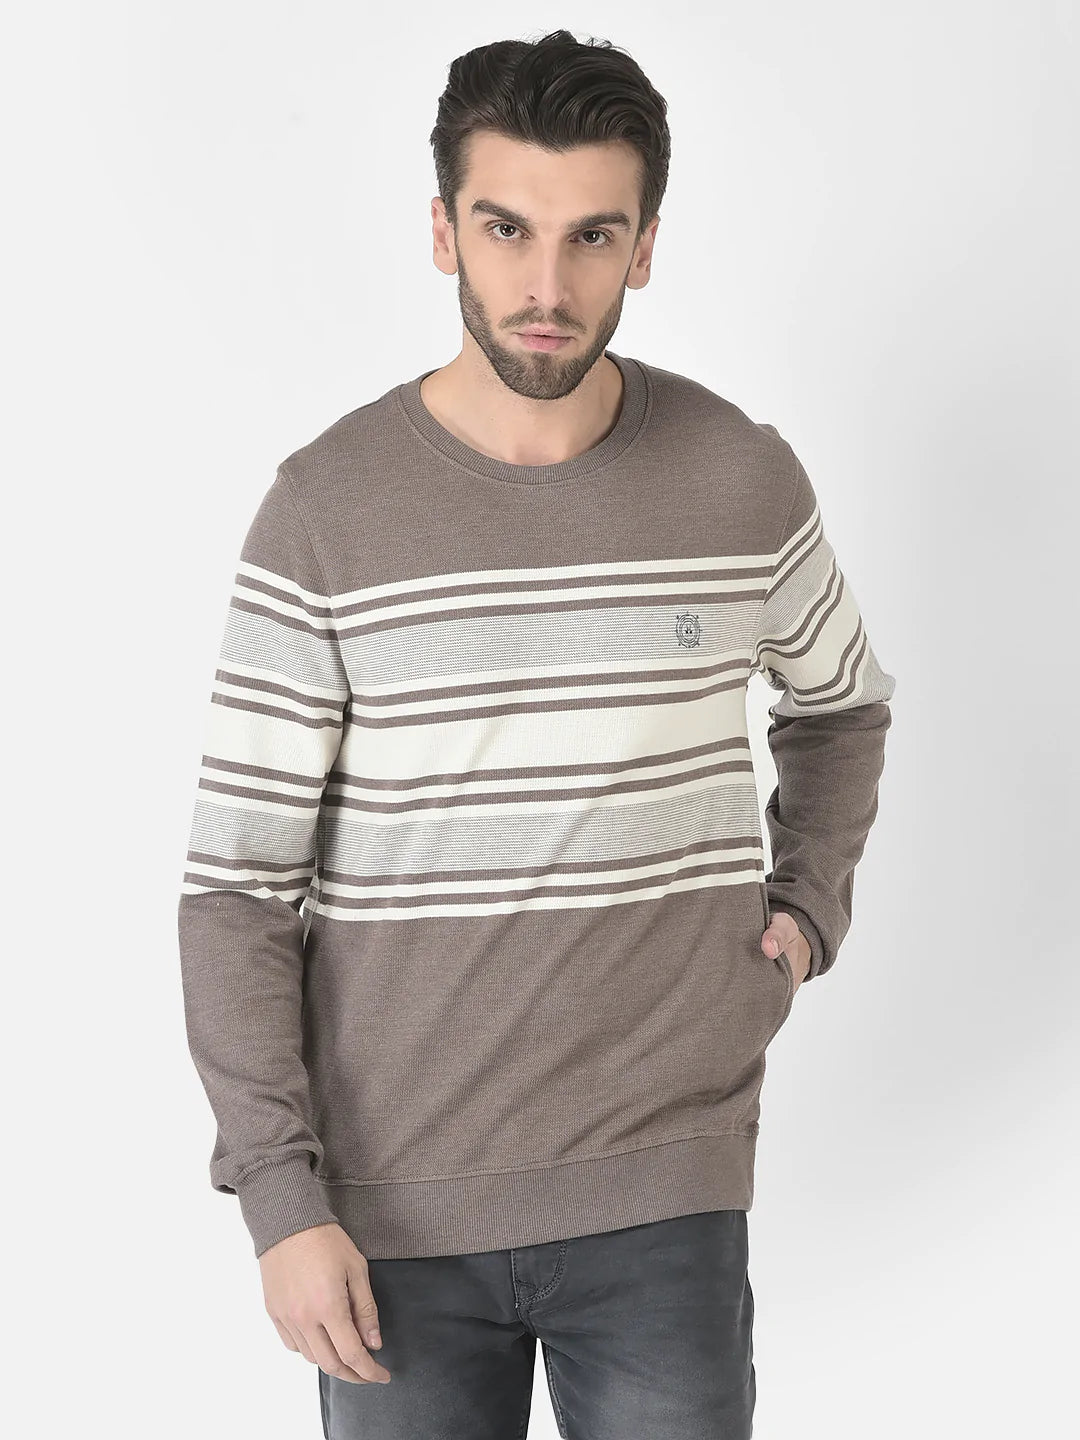  Brown Striped Sweatshirt 